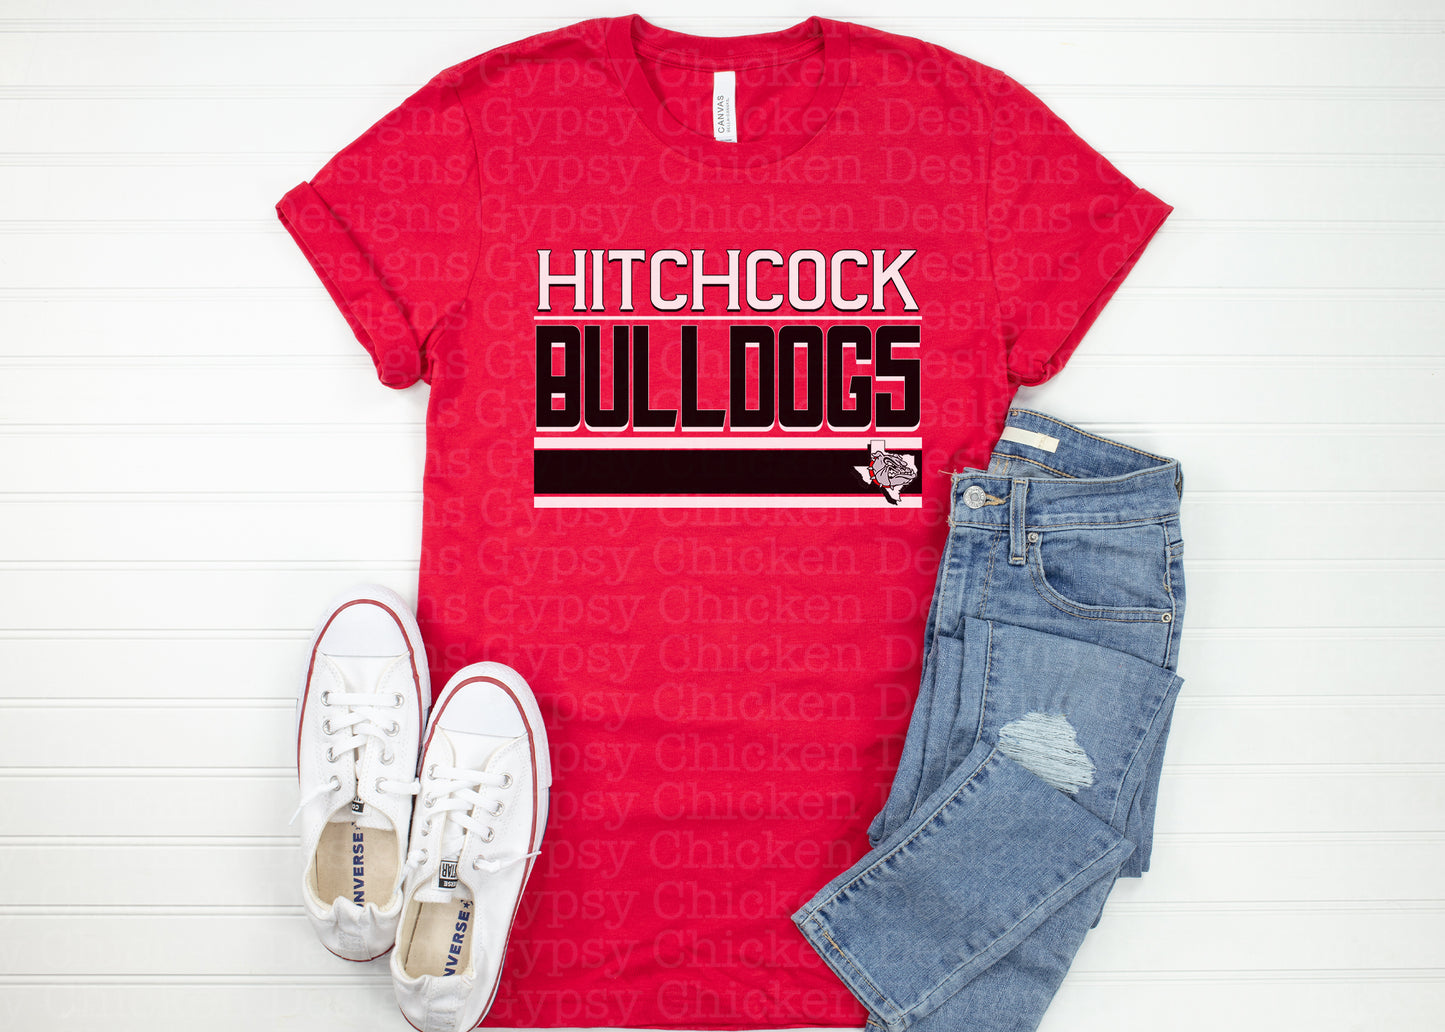 Hitchcock Bulldogs